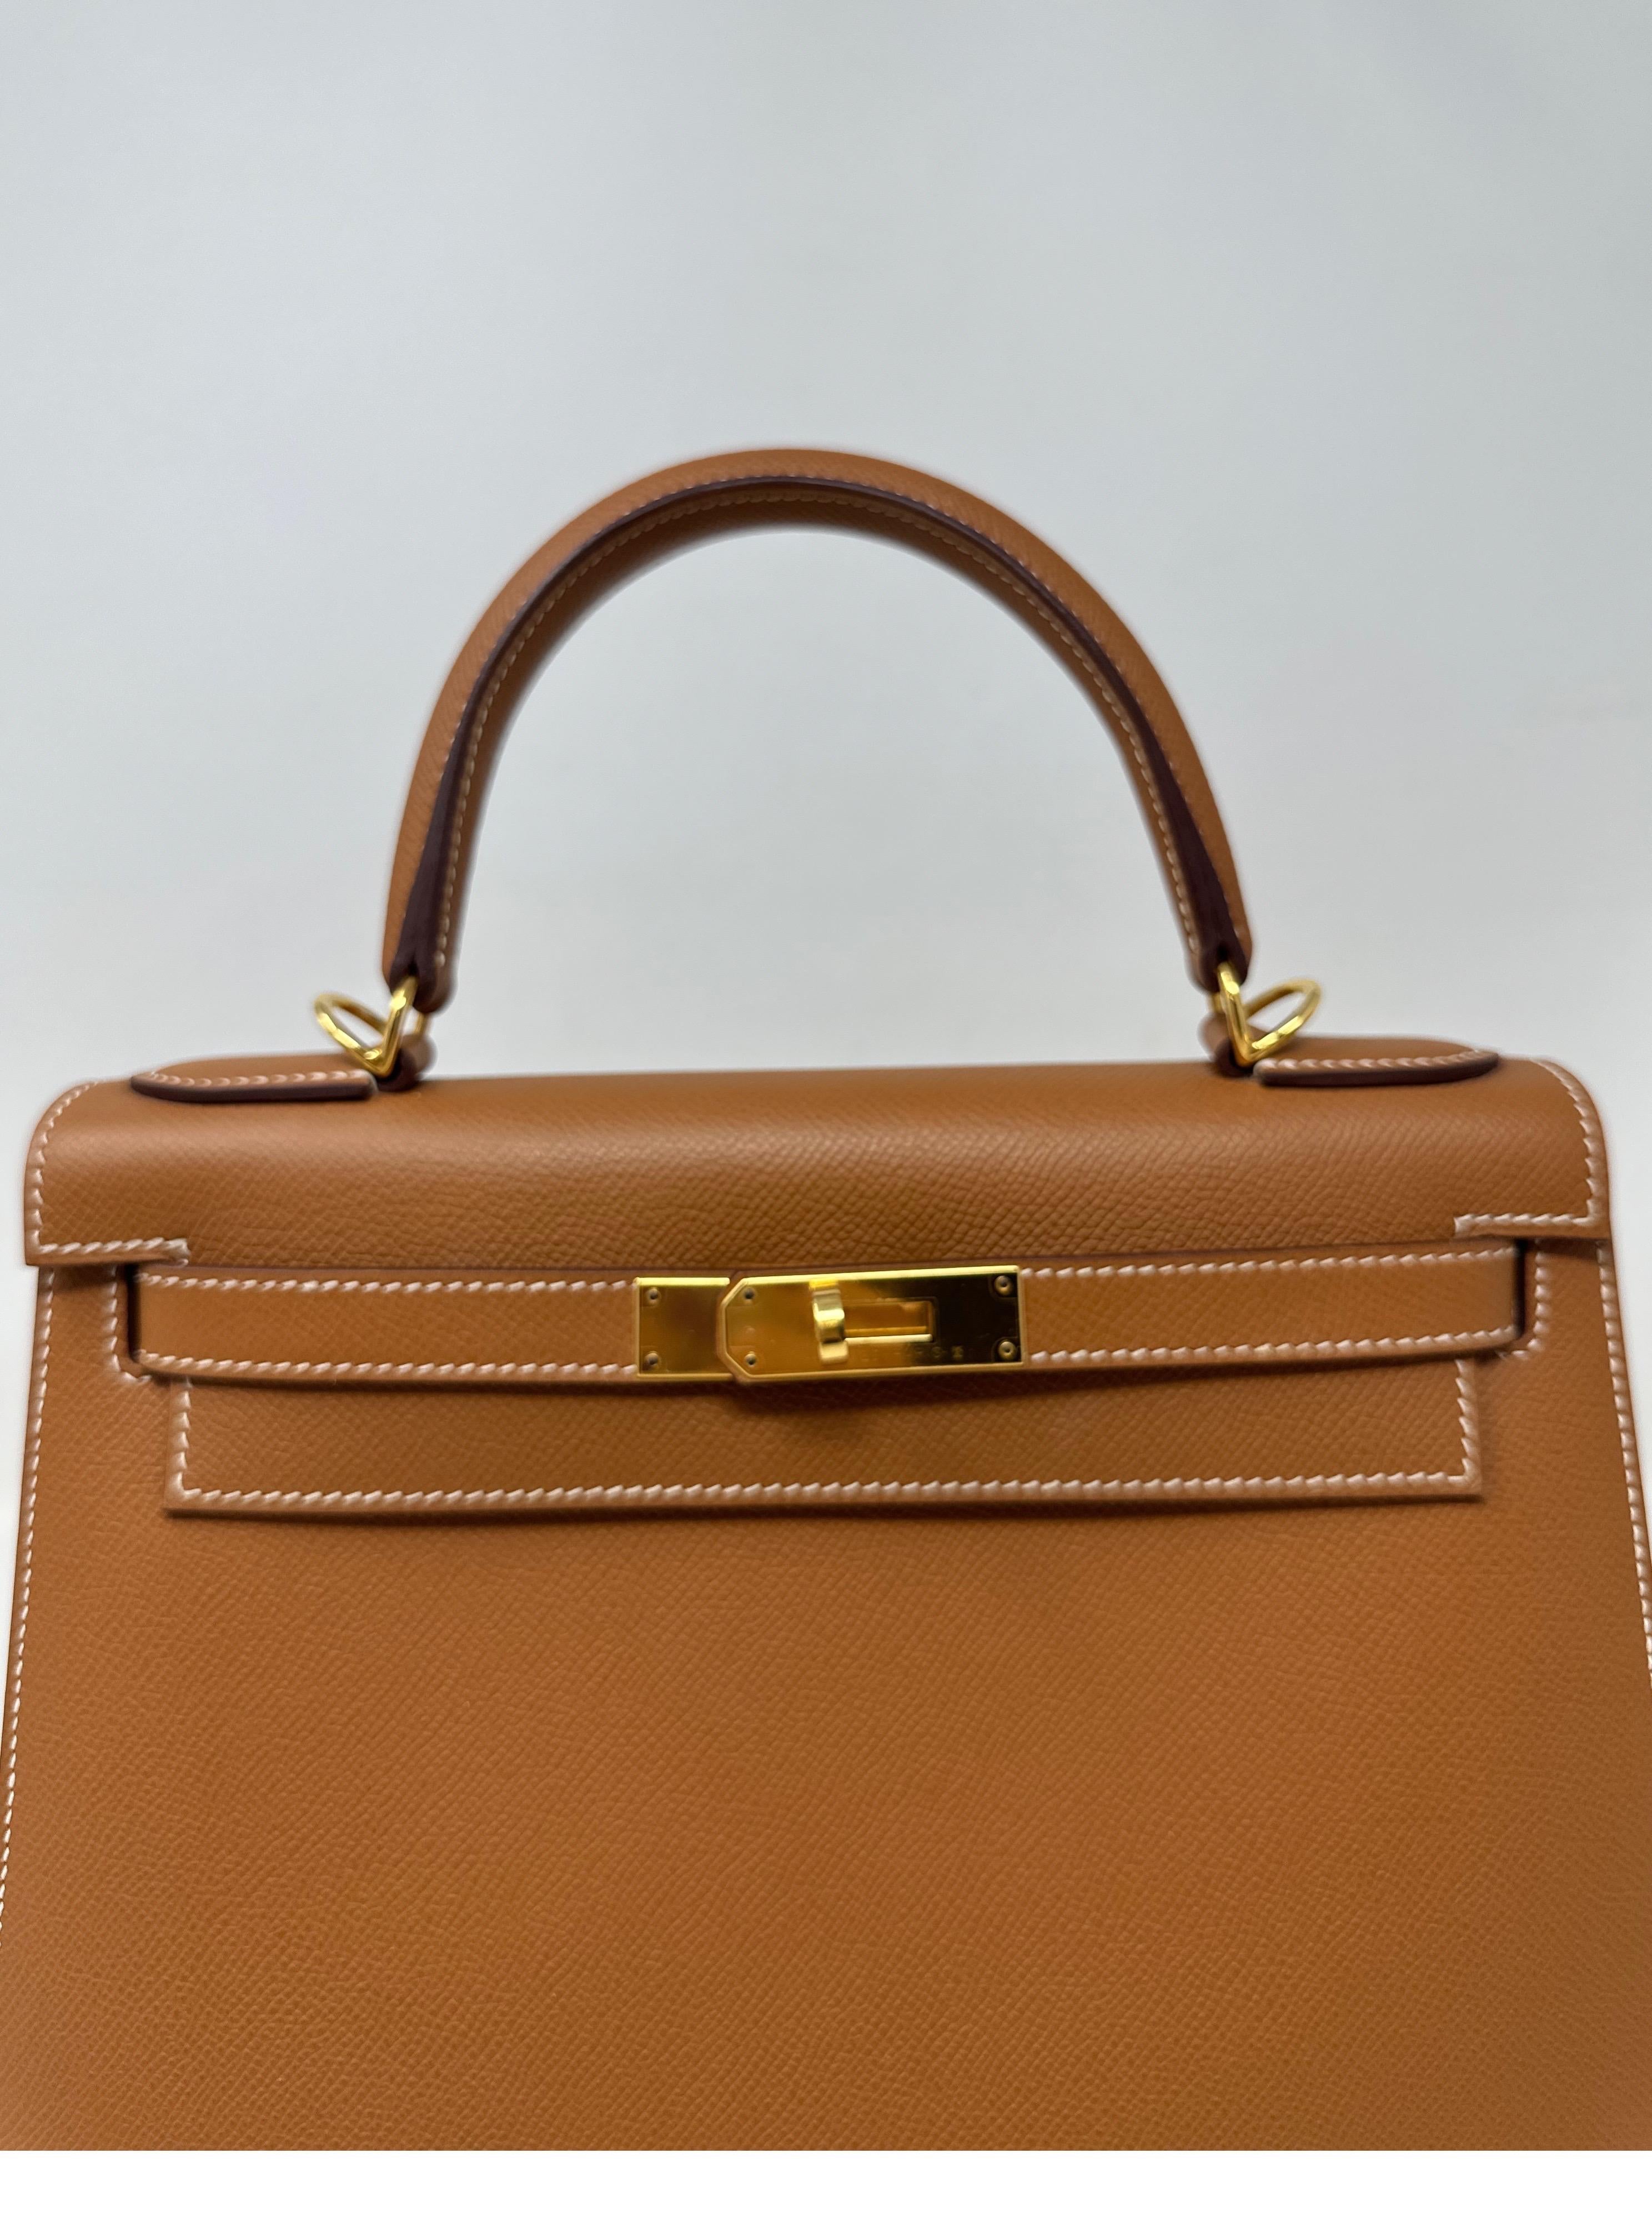 Hermes Gold Kelly 28 Sellier Bag For Sale 6